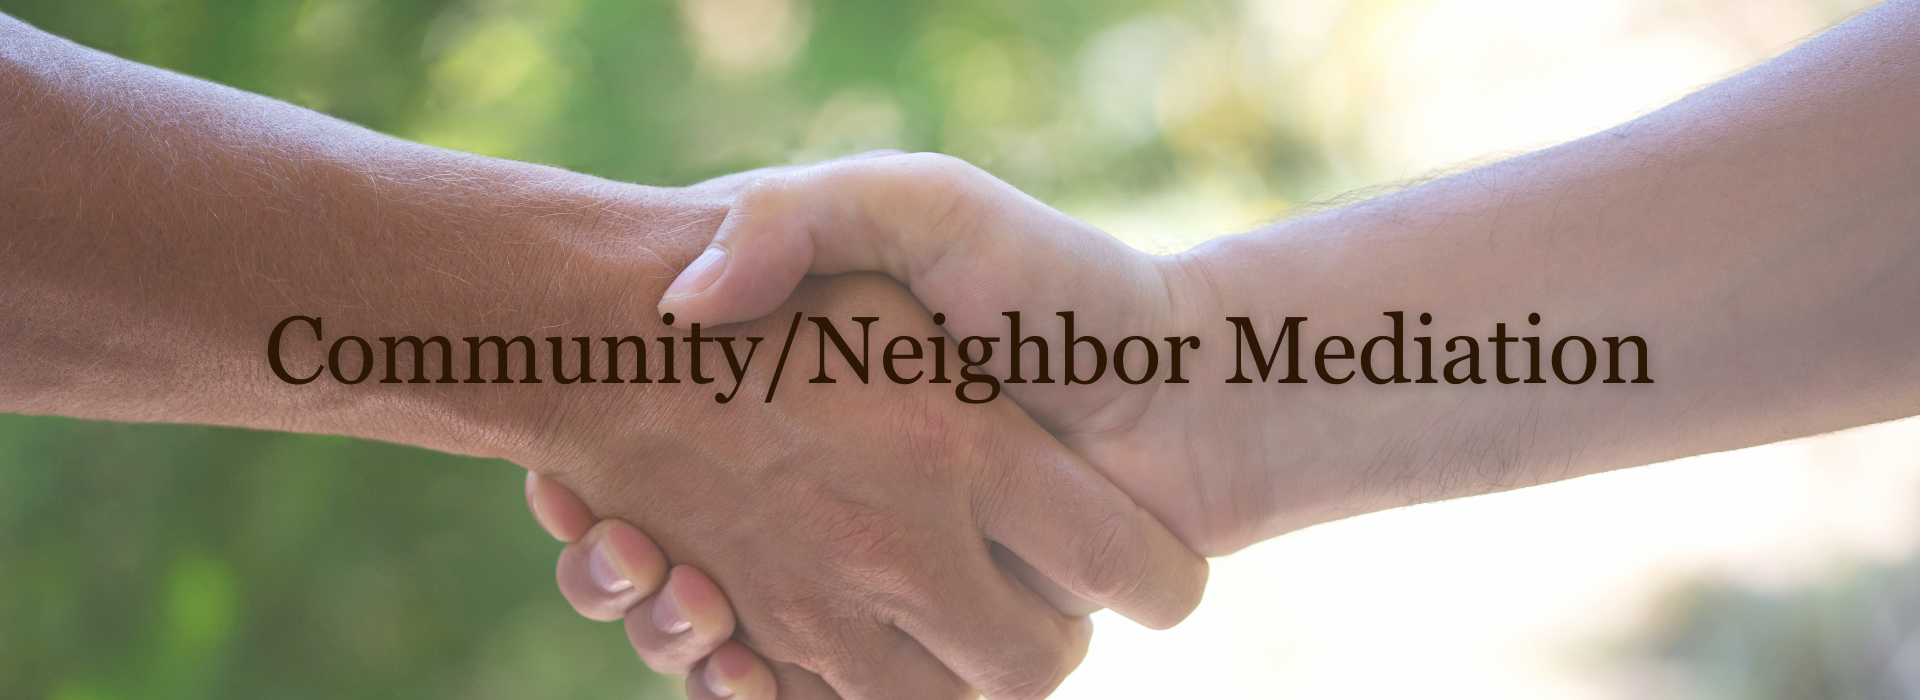 Community/neighbor mediation